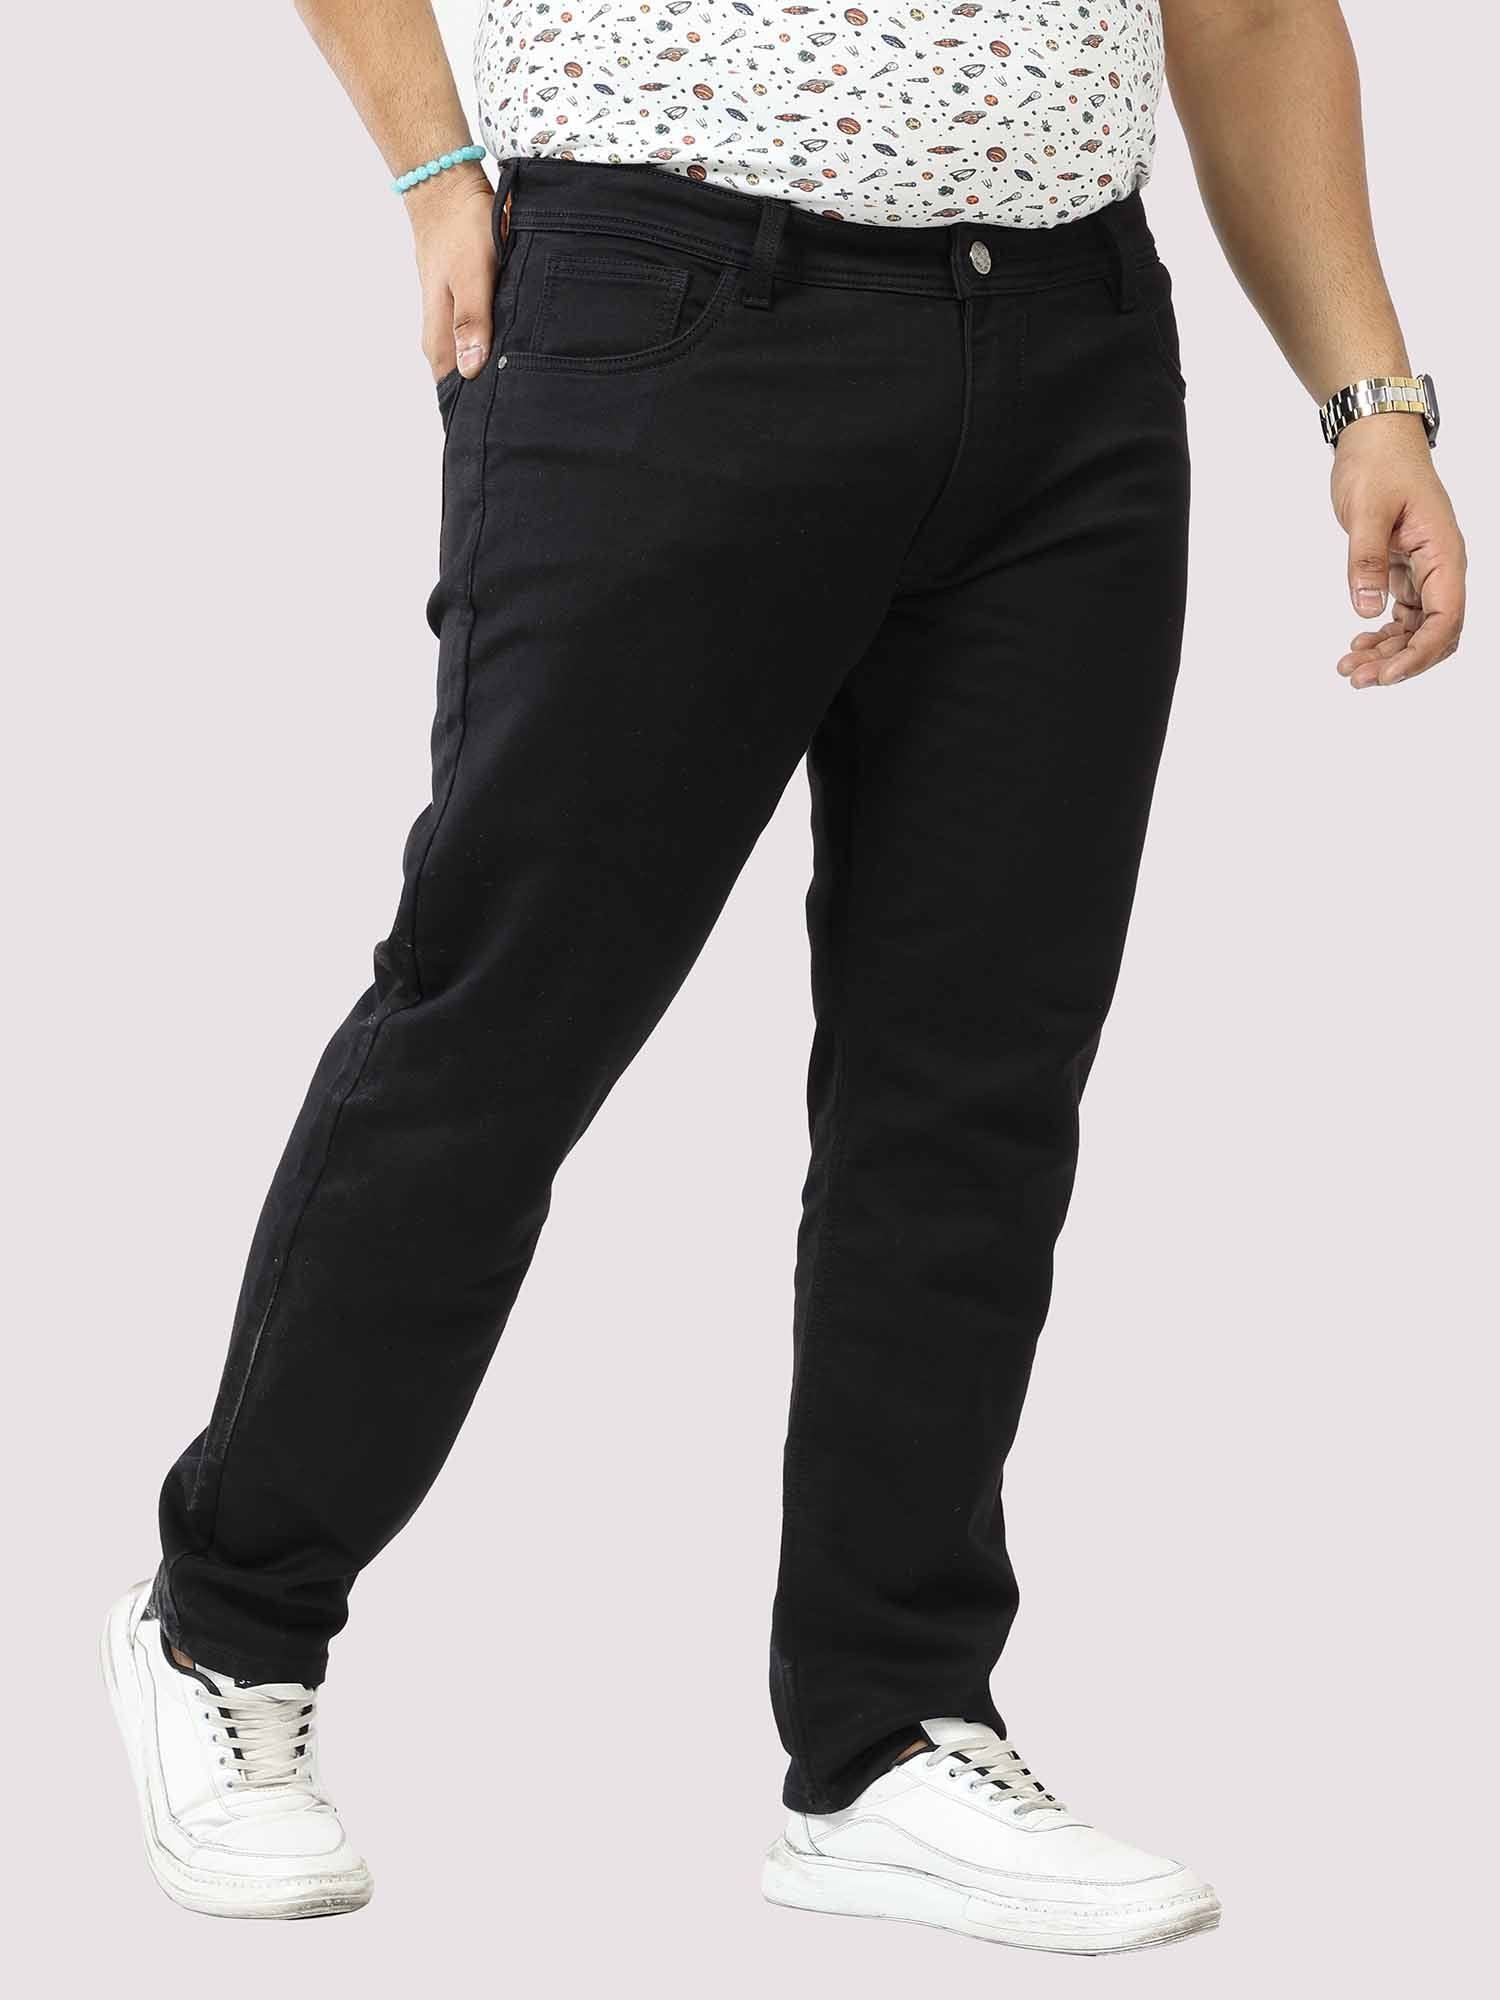 Premium Black Jeans Men's Plus Size - Guniaa Fashions